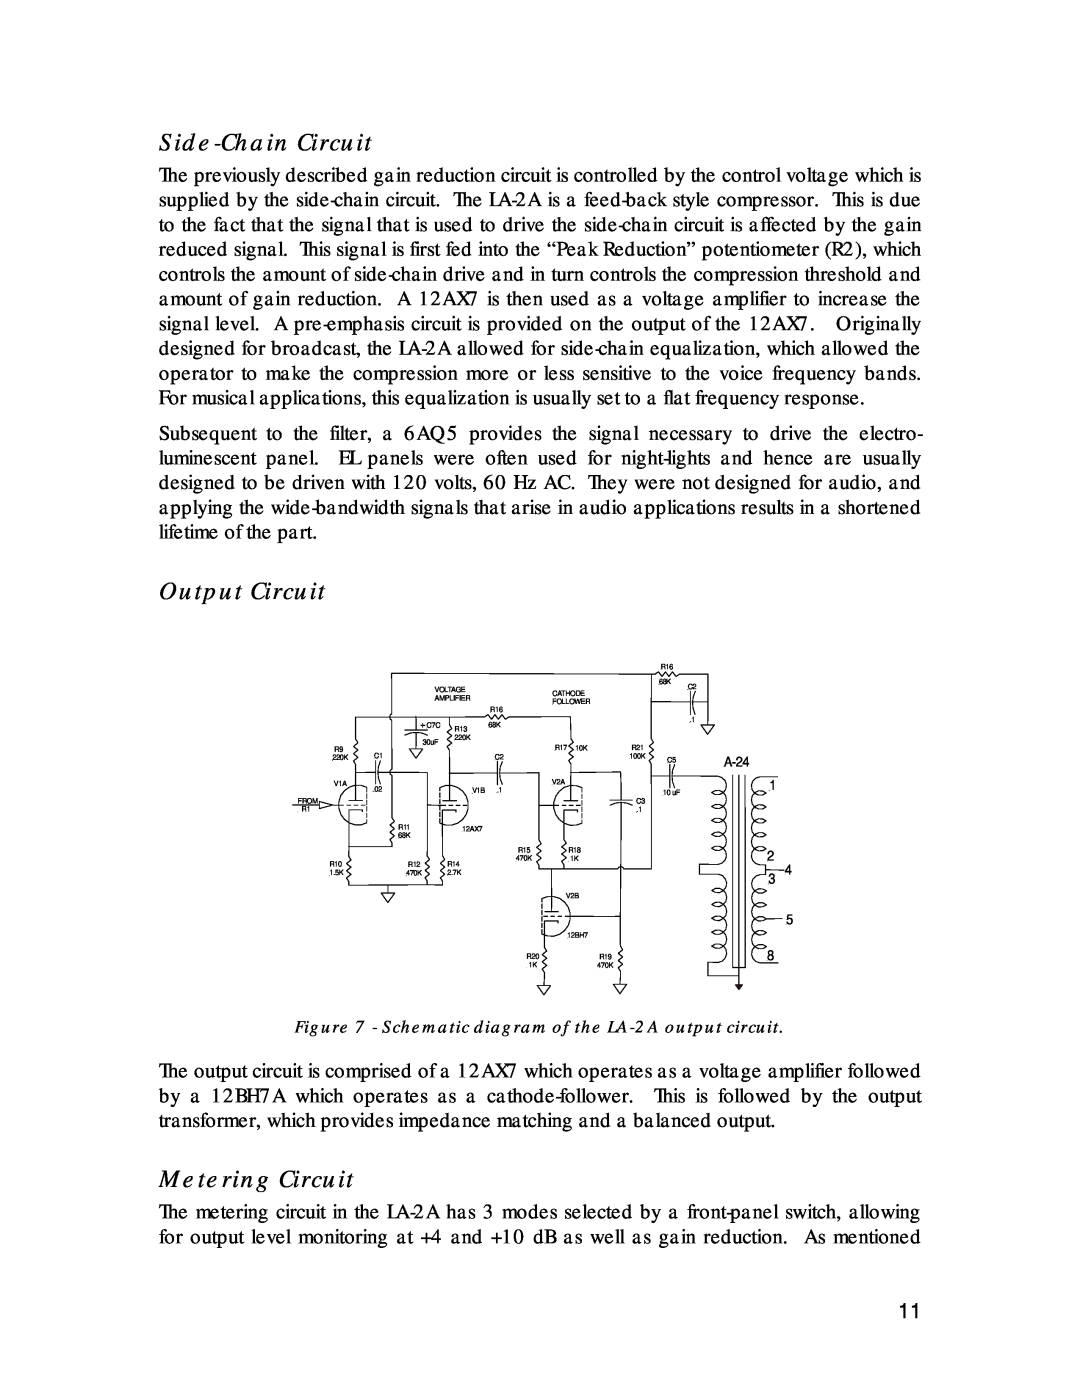 Inova LA-2A manual Side-ChainCircuit, Output Circuit, Metering Circuit, A-24 